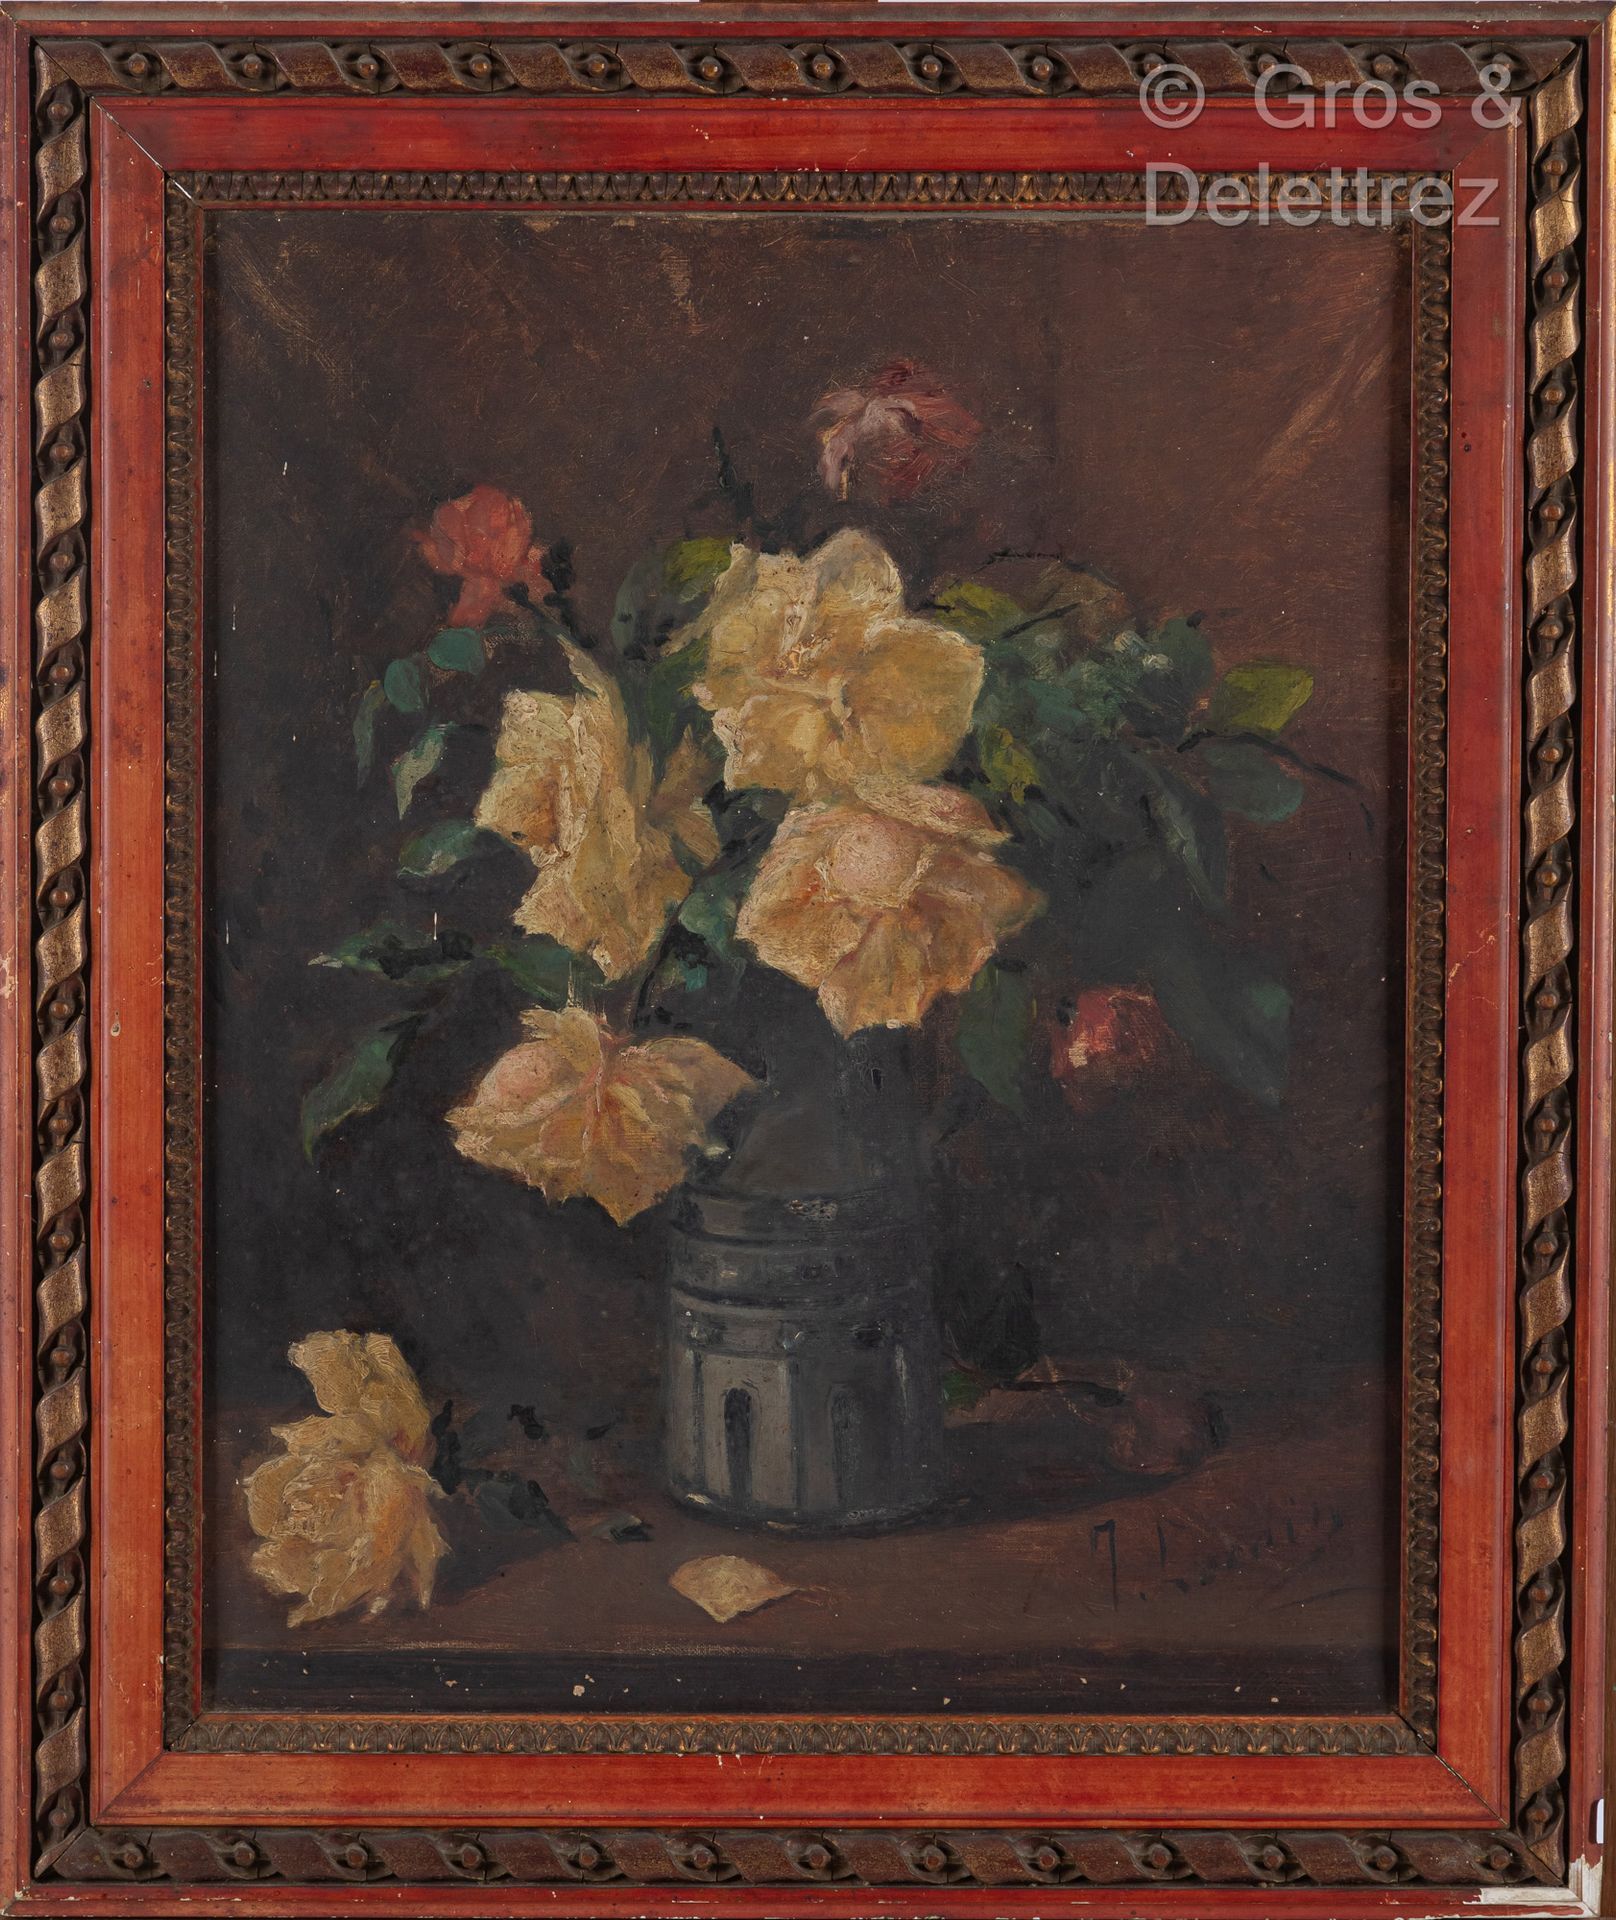 Null 朱莉-洛兰(XIX-XXe)

玫瑰花束

布面油画，右下角有签名

55 x 46 厘米